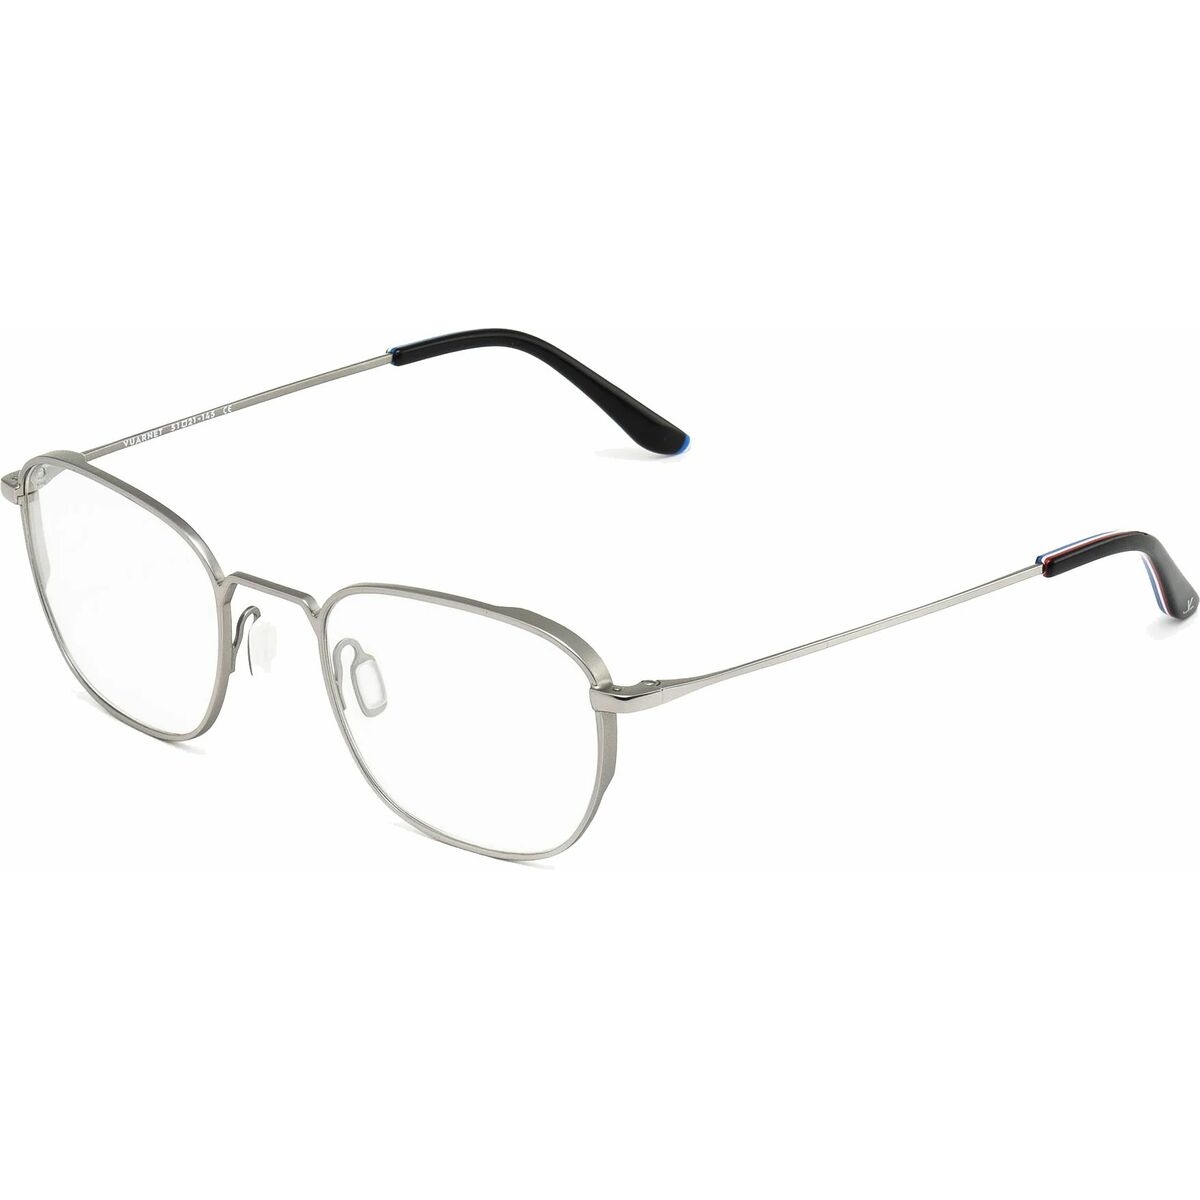 Kaufe Herrensonnenbrille Vuarnet VL190200011121 Ø 55 mm bei AWK Flagship um € 88.00